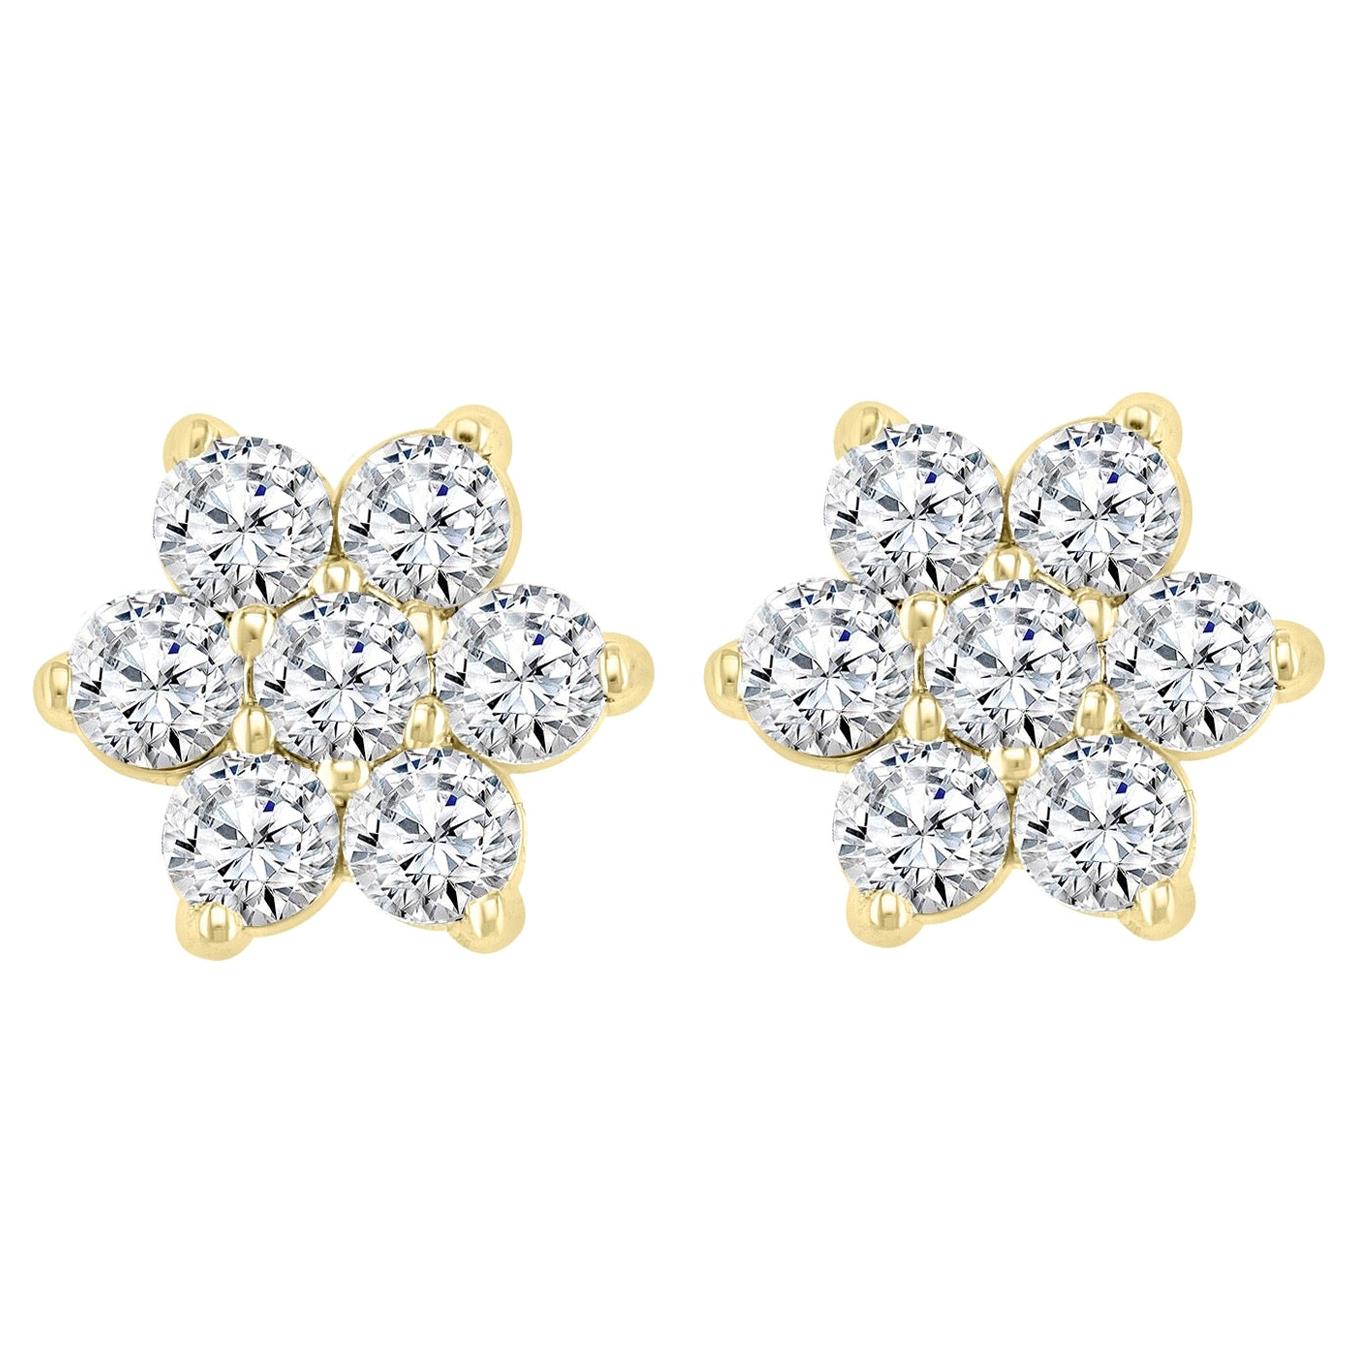 2.80 Carat 7 Diamond Floral Cluster Flower Stud Earrings in 14 Karat Yellow Gold